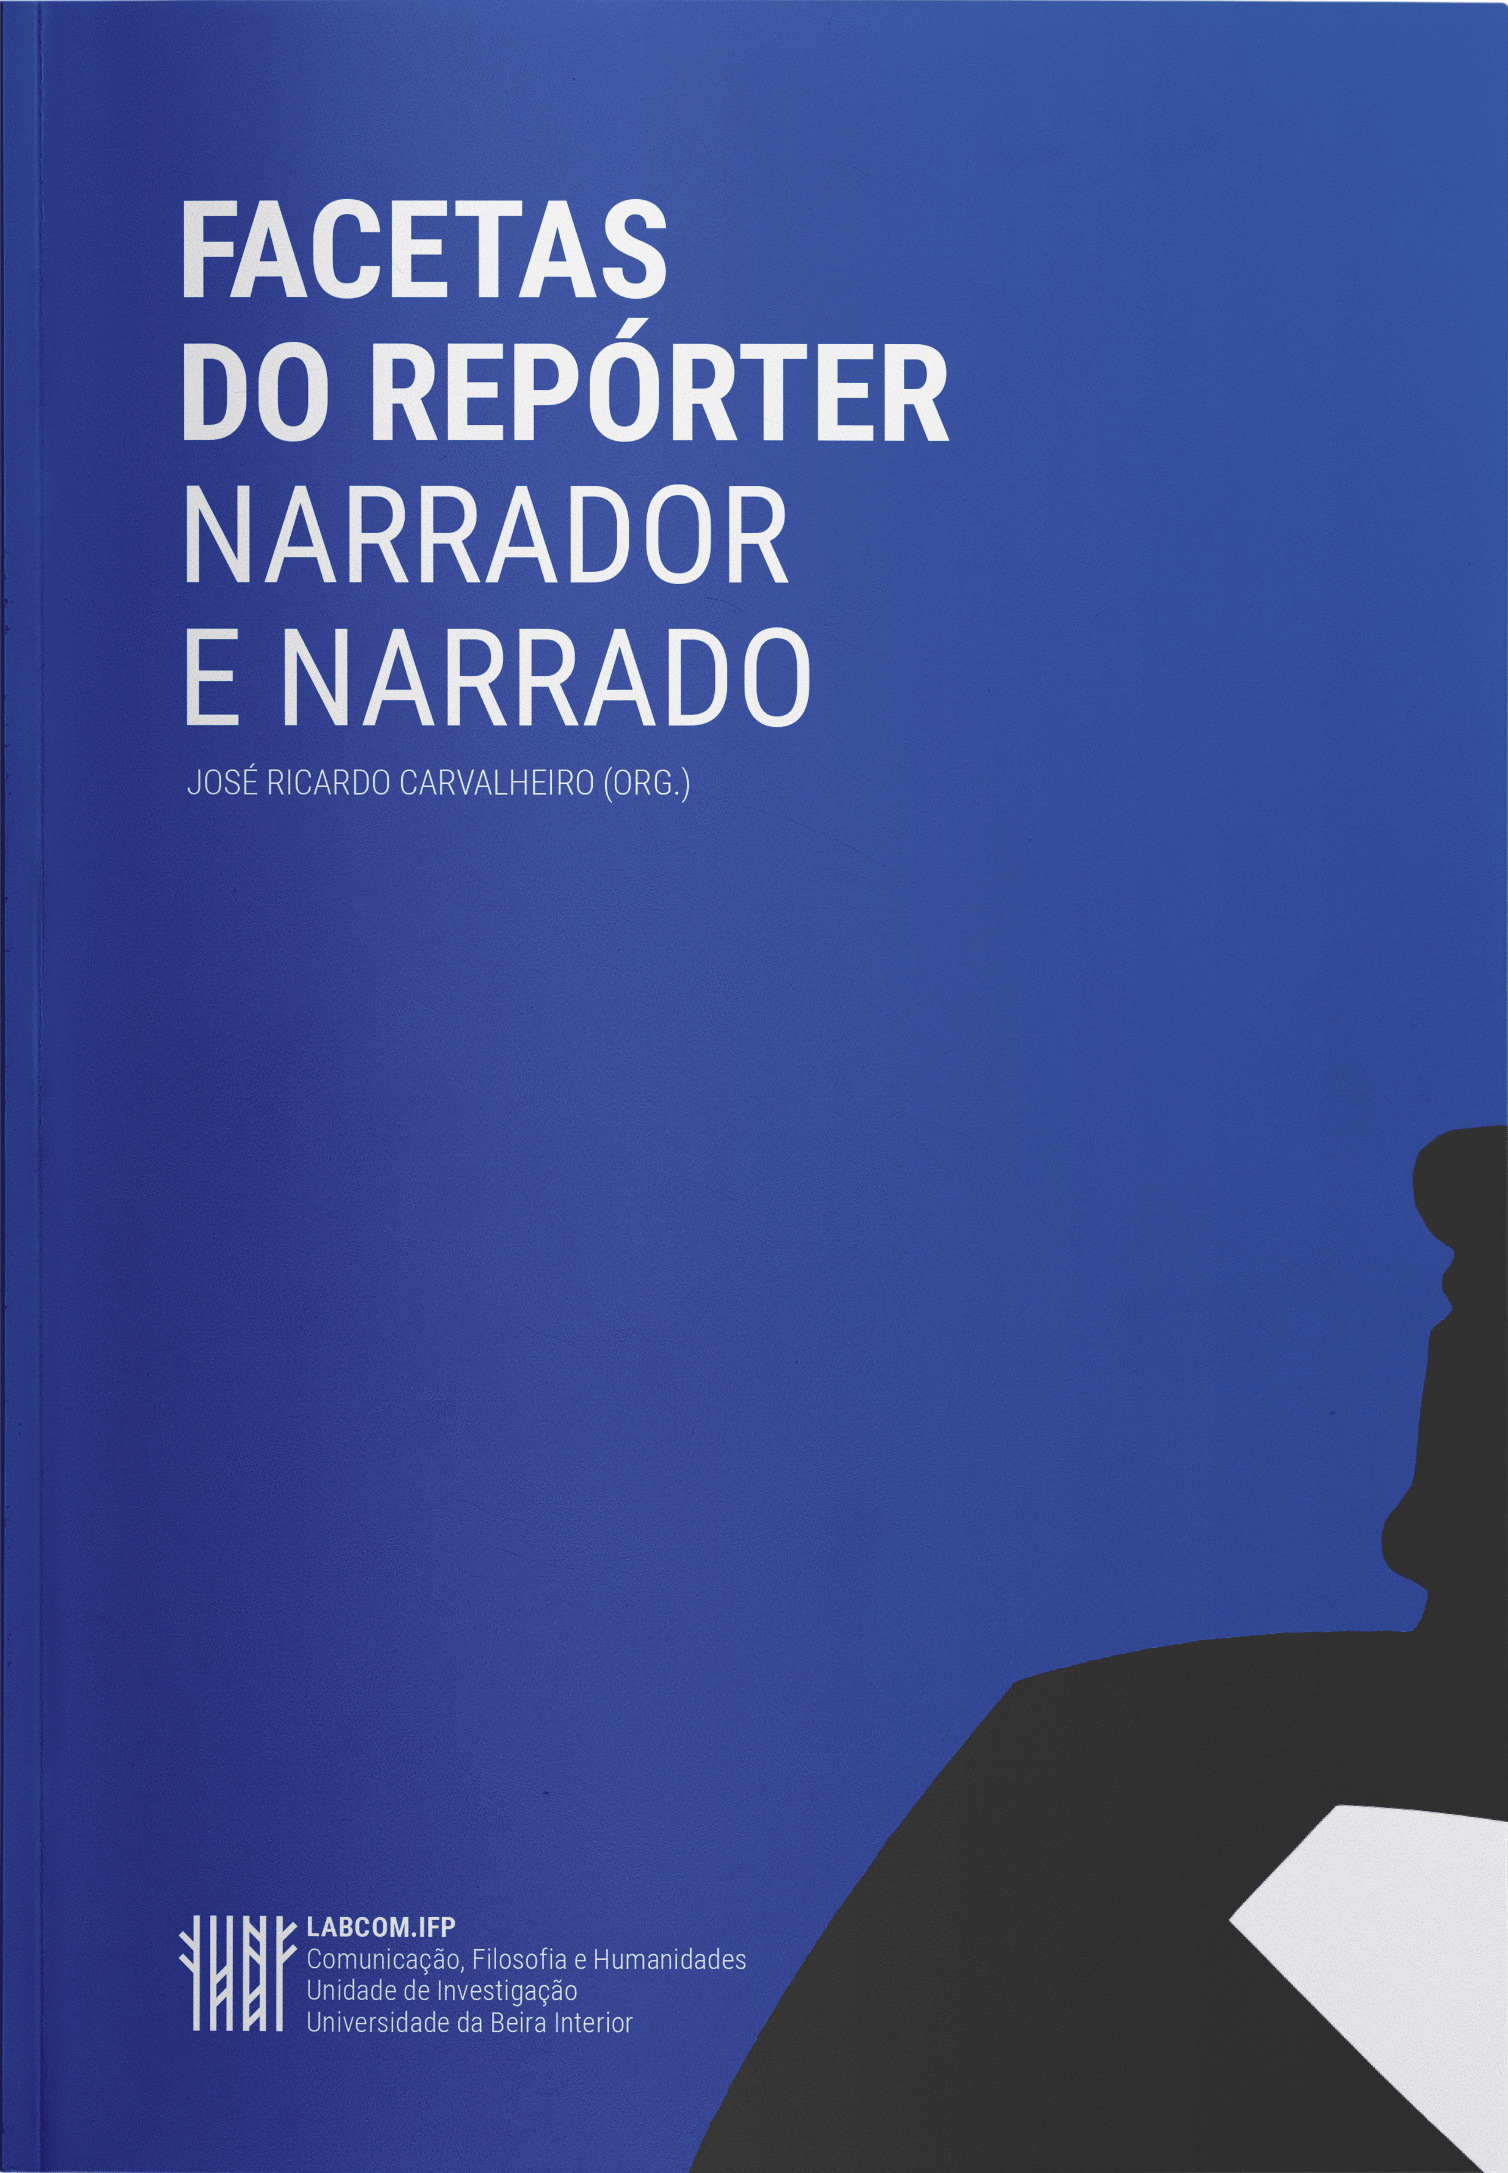 Capa: José Ricardo Carvalheiro (Org.) (2017) Facetas do repórter: narrador e narrado. Communication  +  Philosophy  +  Humanities. .